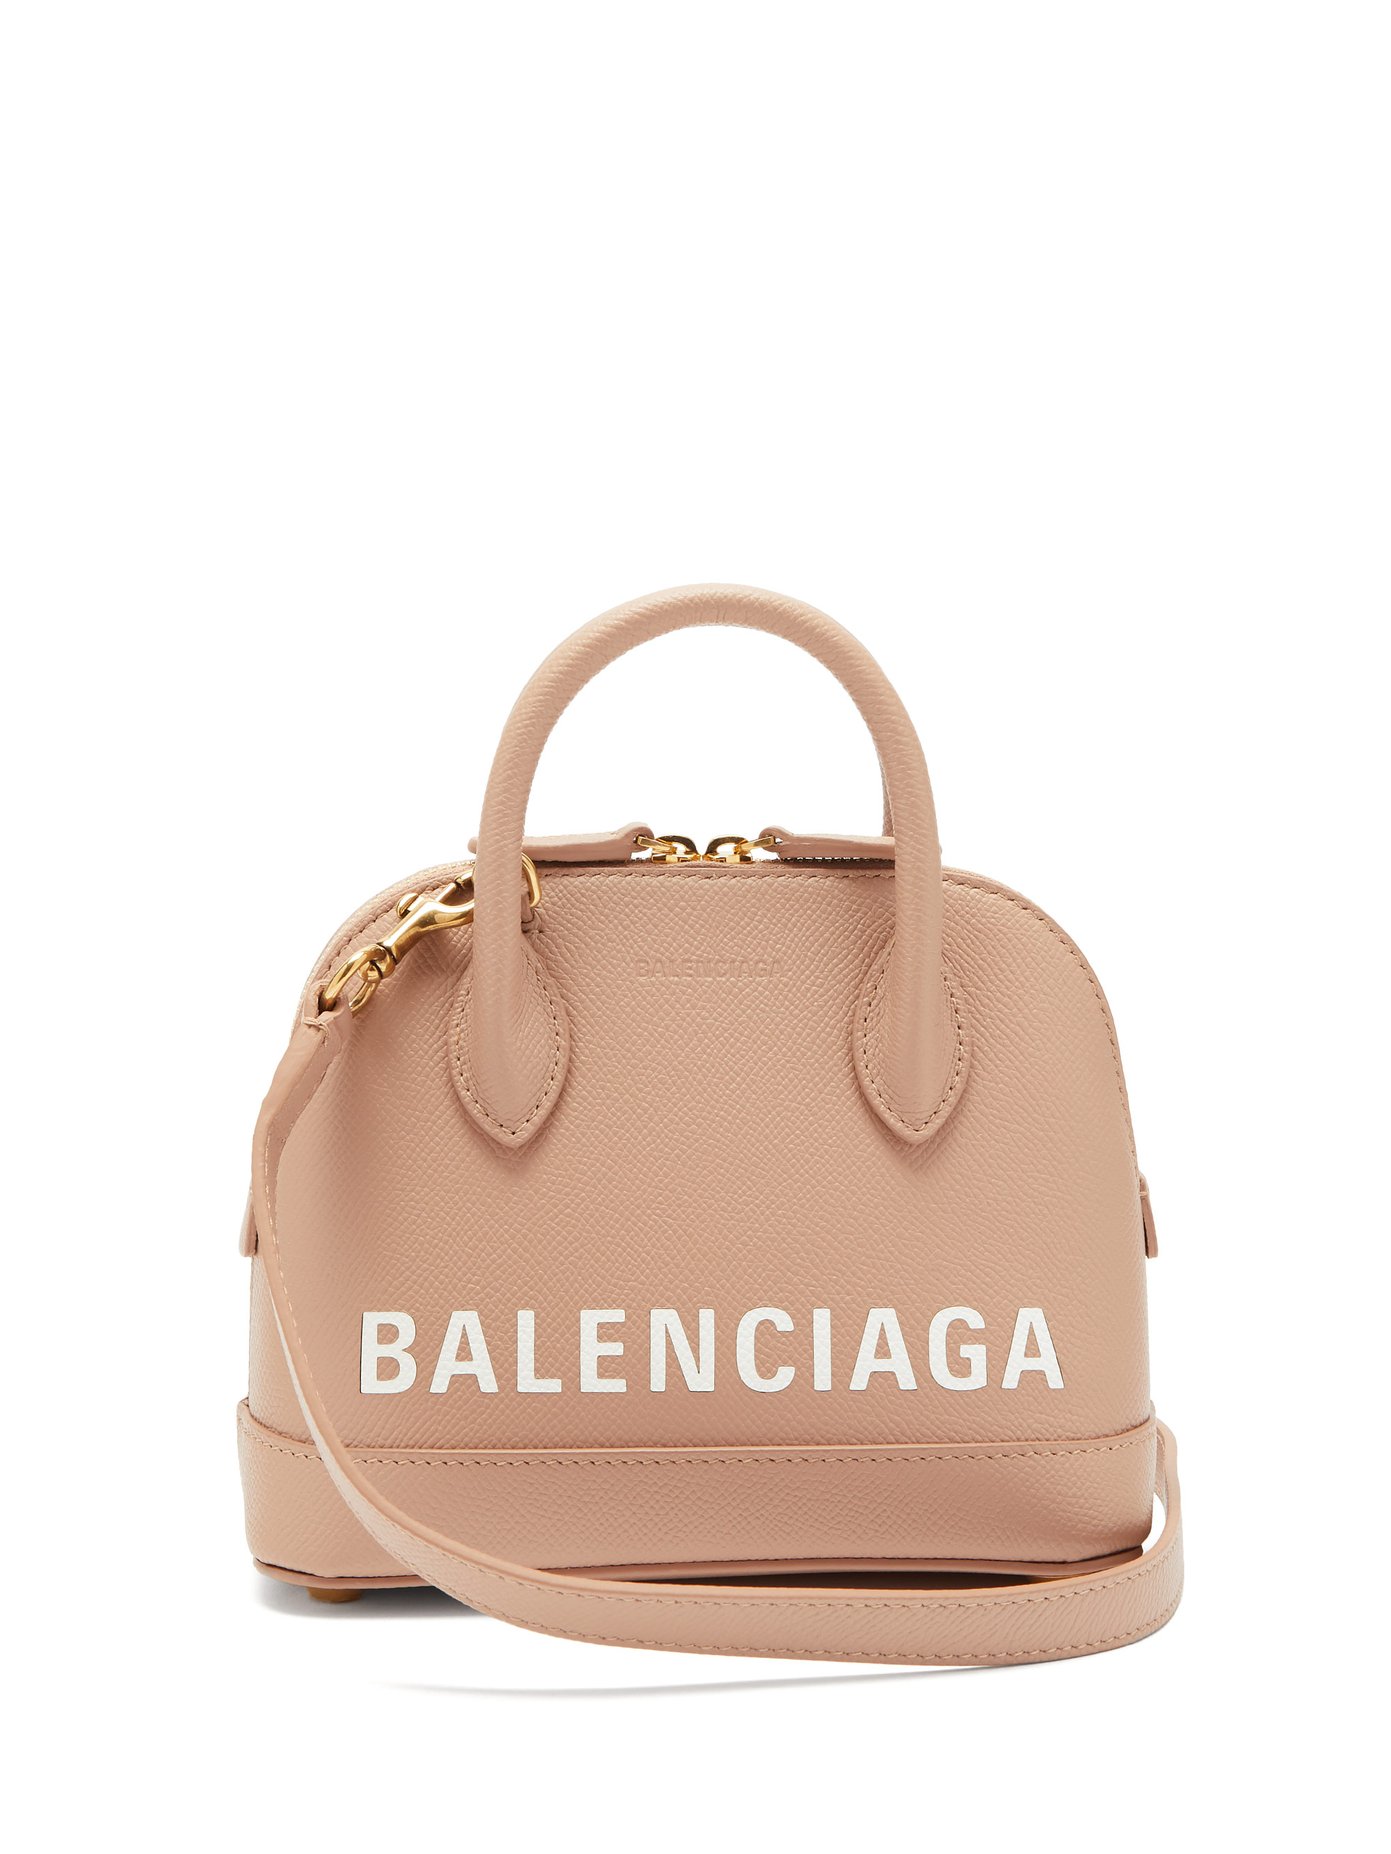 Balenciaga Ville Bag Hot Sale, 57% OFF | www.visitmontanejos.com